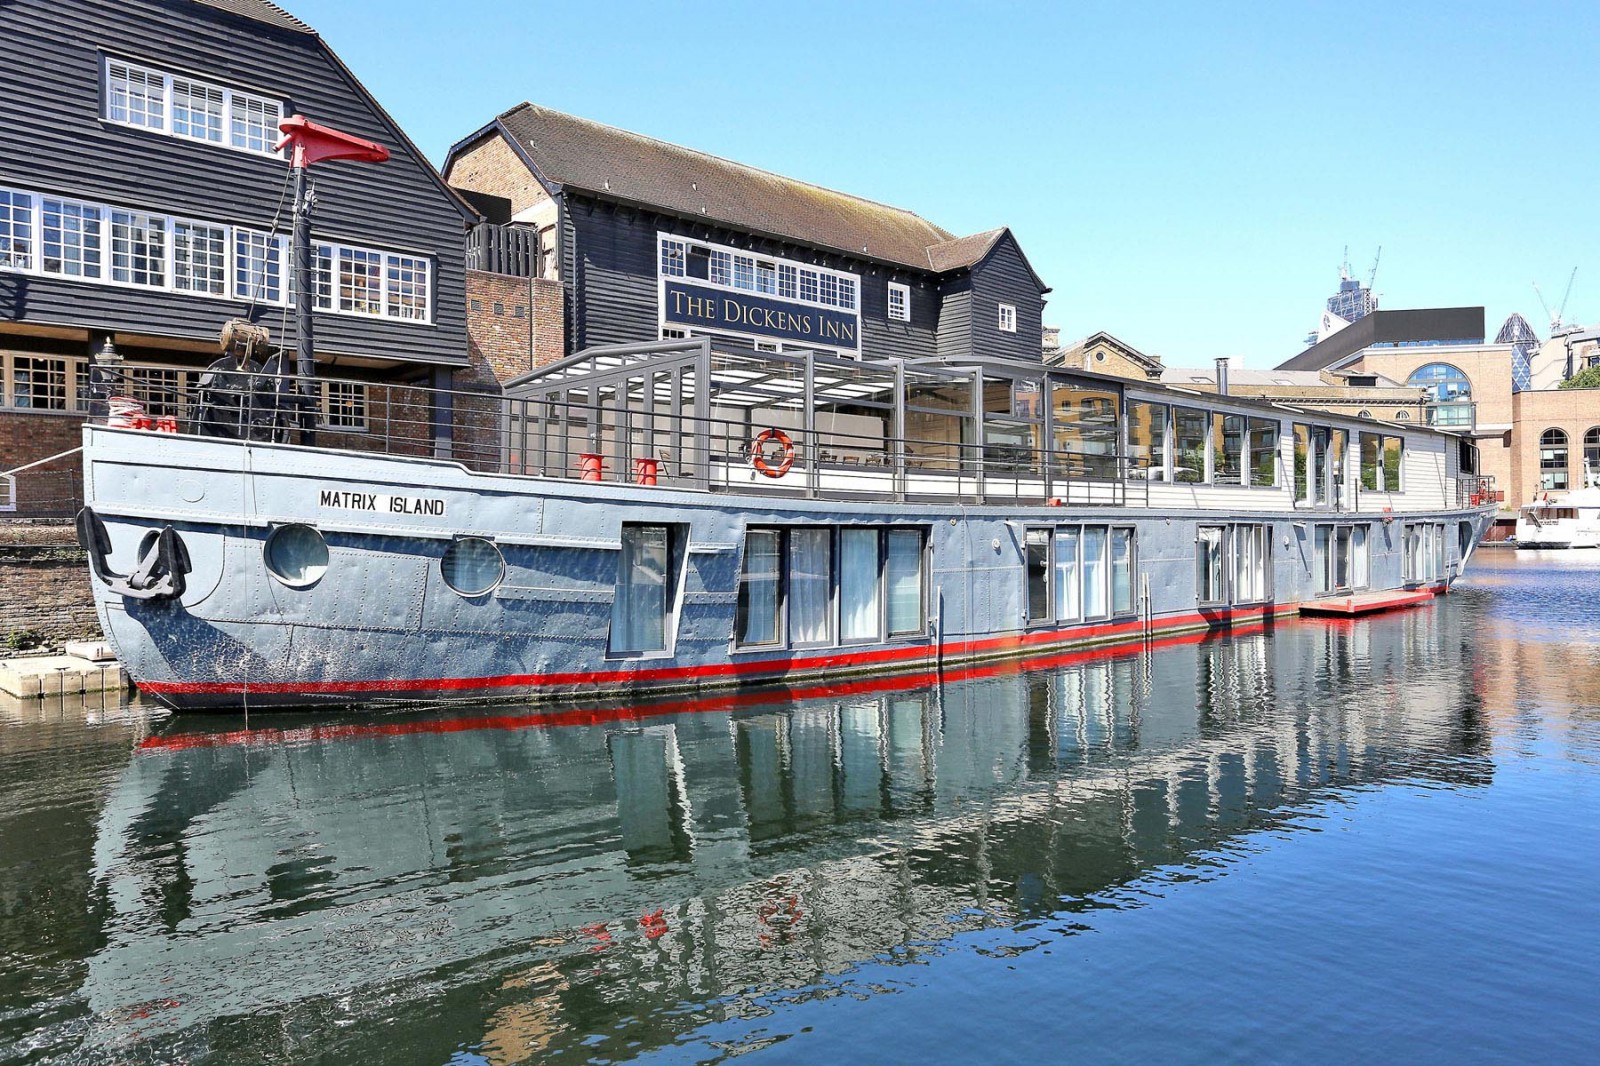 matrix island - River boat hire & Boat hire in United Kingdom England Greater London London St Katharine Docks 1